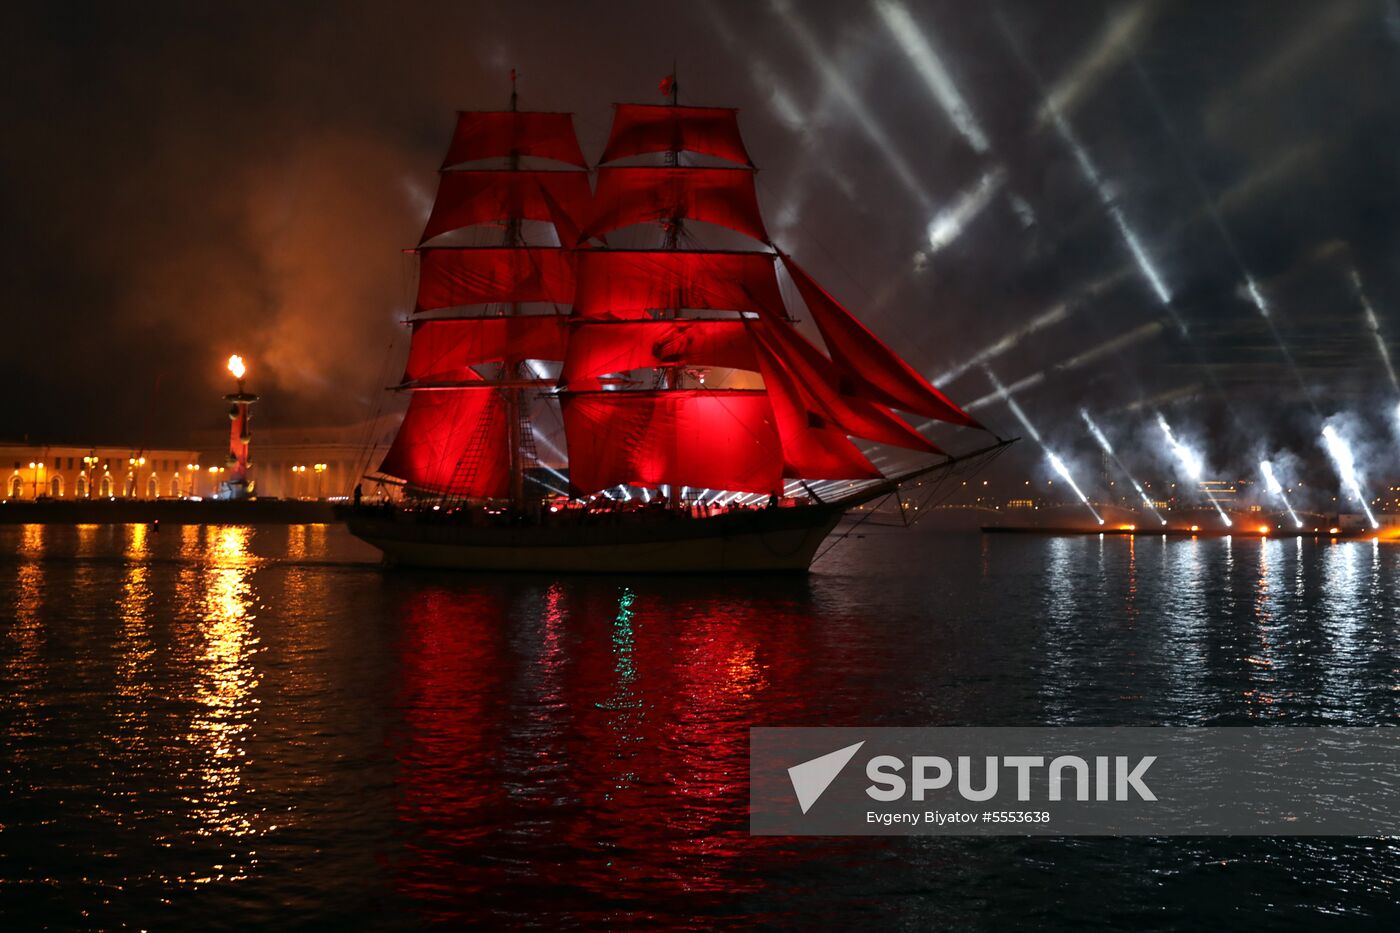 Scarlet Sails festival for high school graduates in St. Petersburg